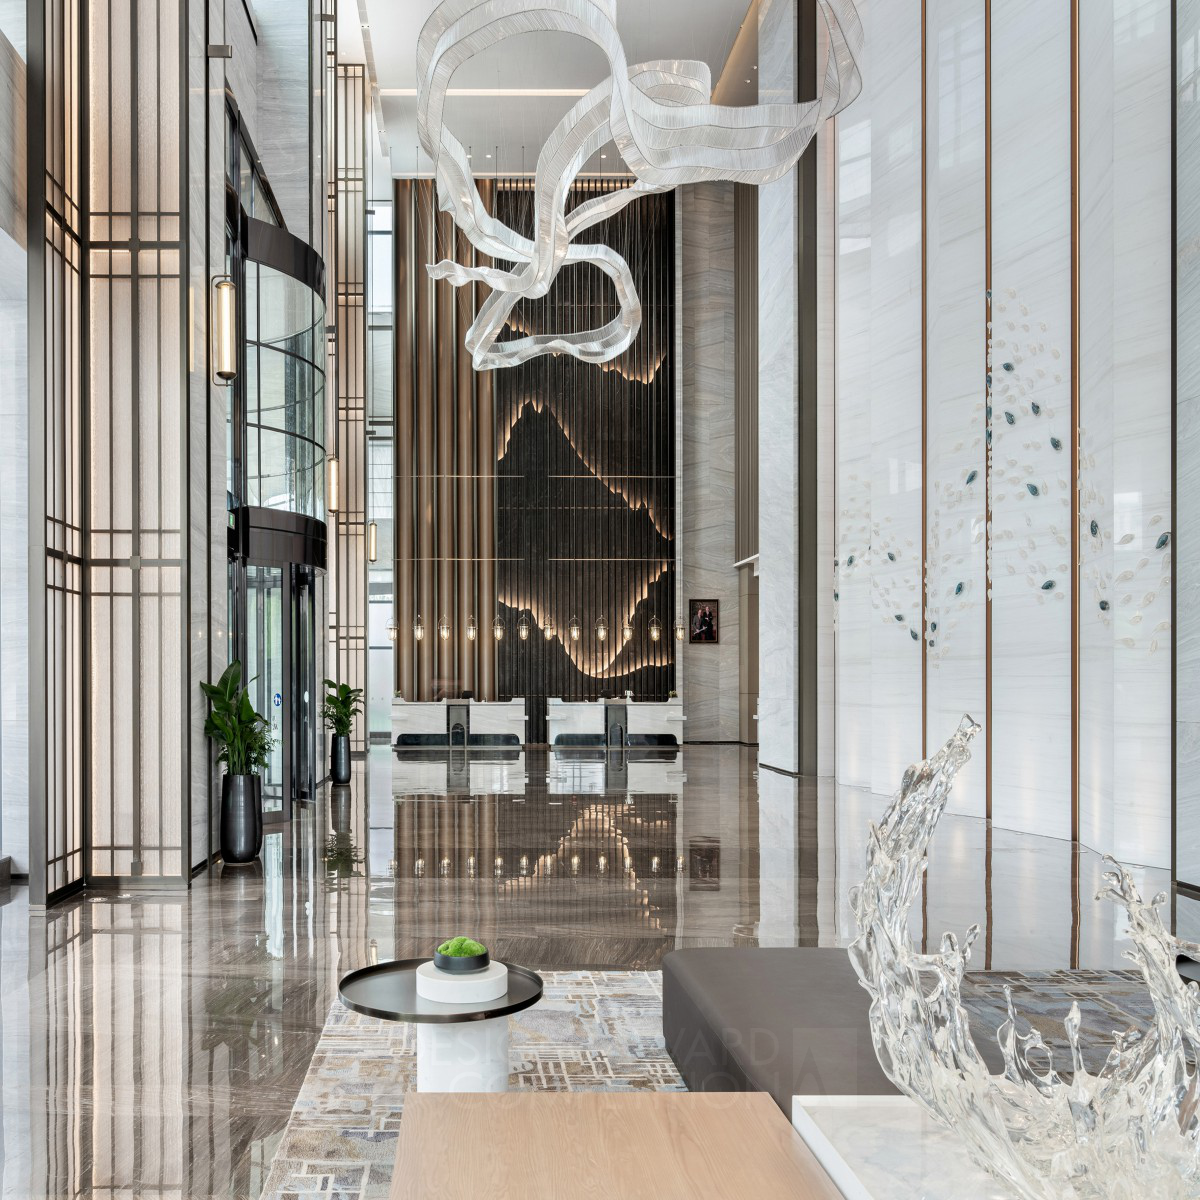 Zhangjiagang Marriott Hotel Hospitality Interior Design by Bo Liu